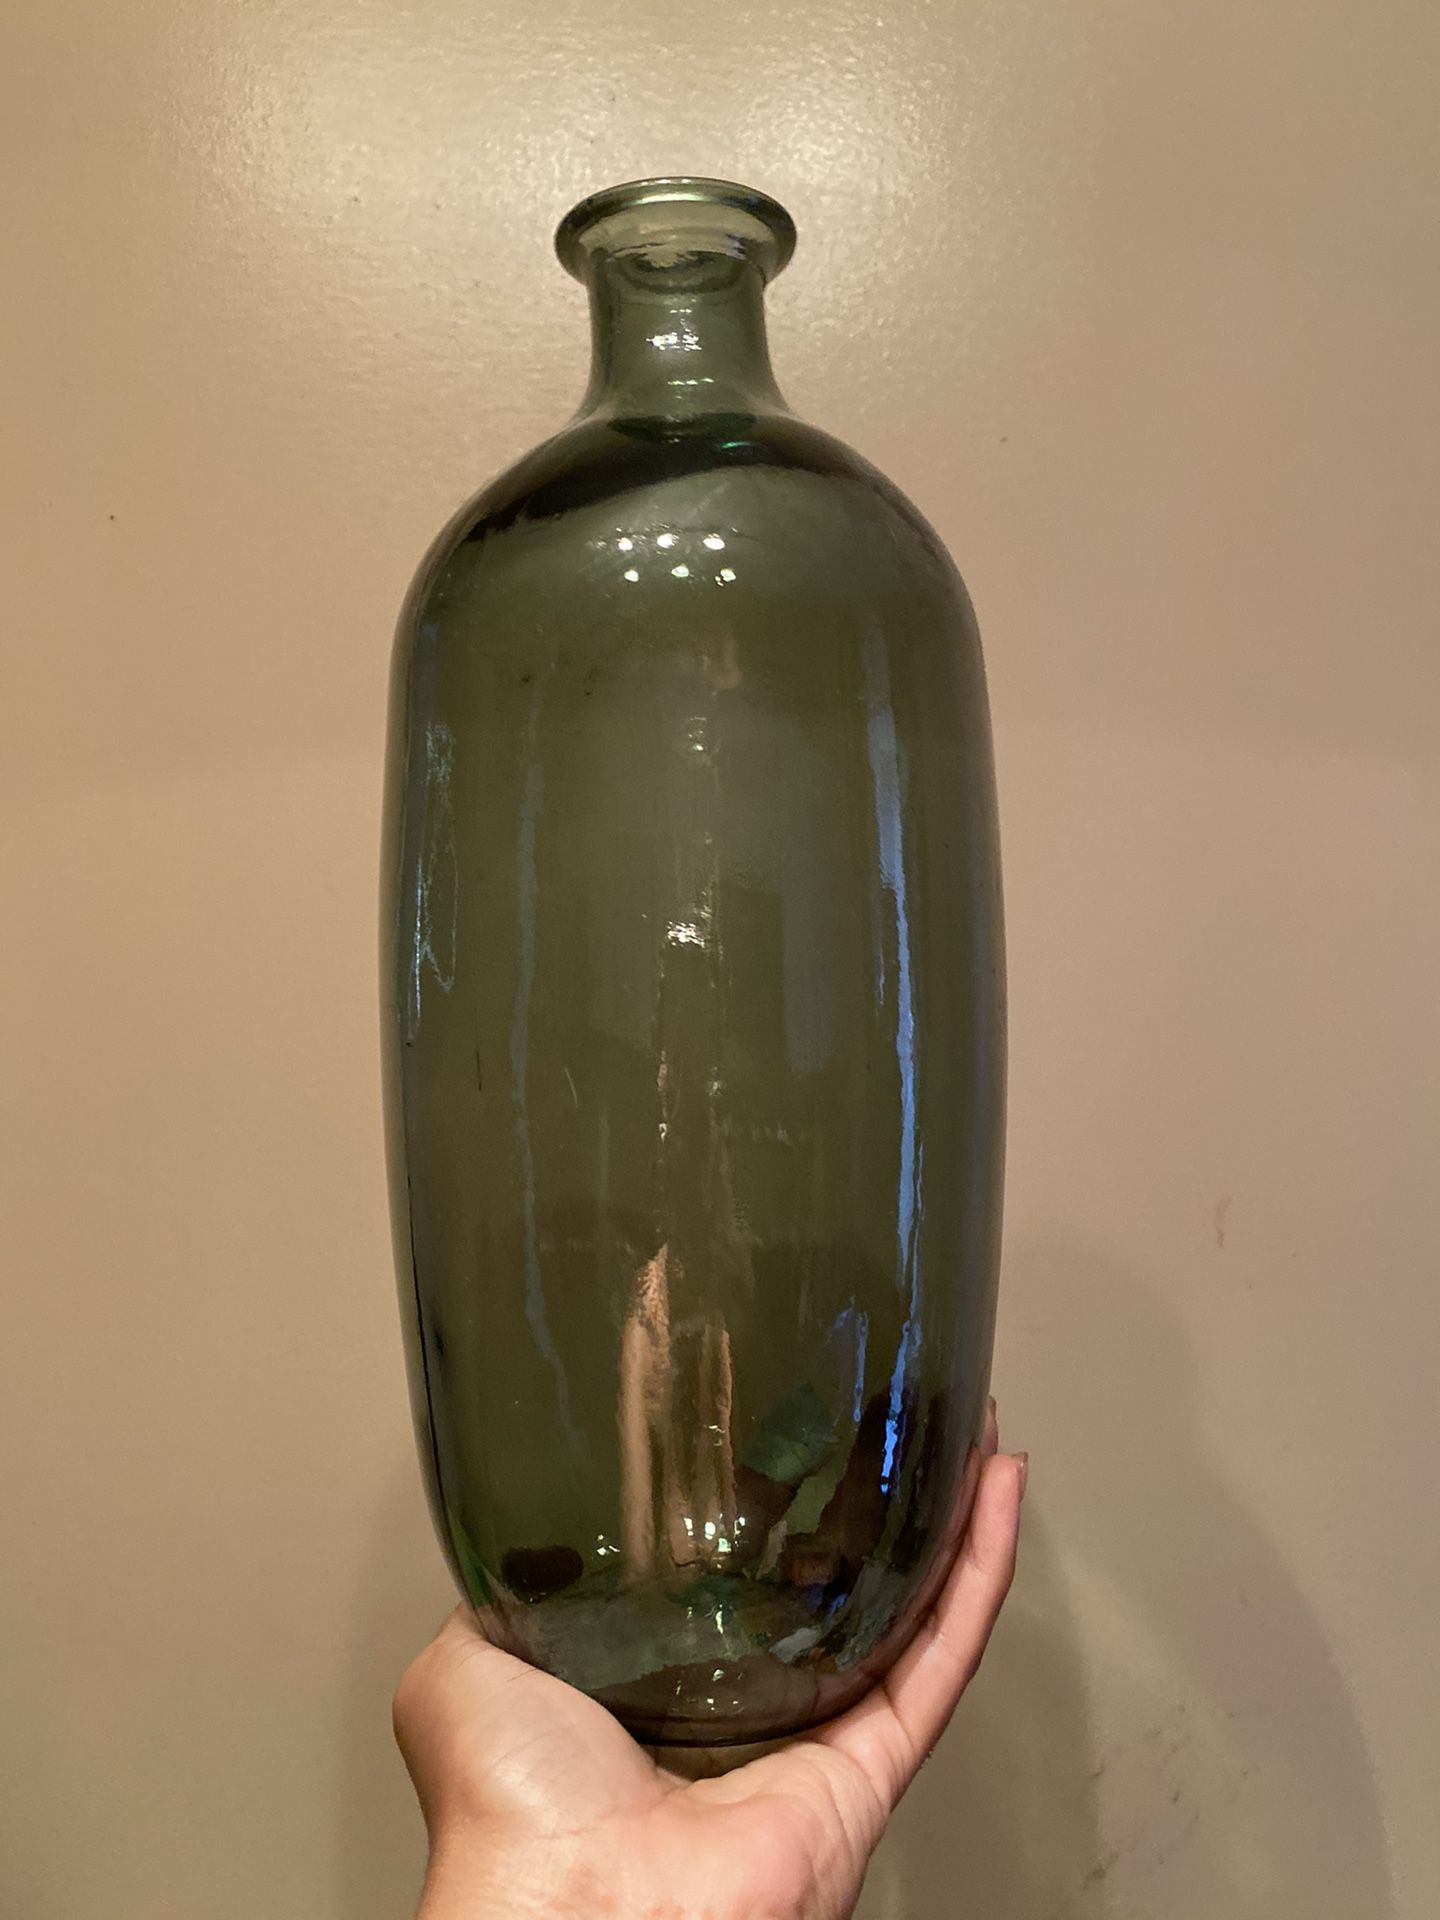 Green Vase